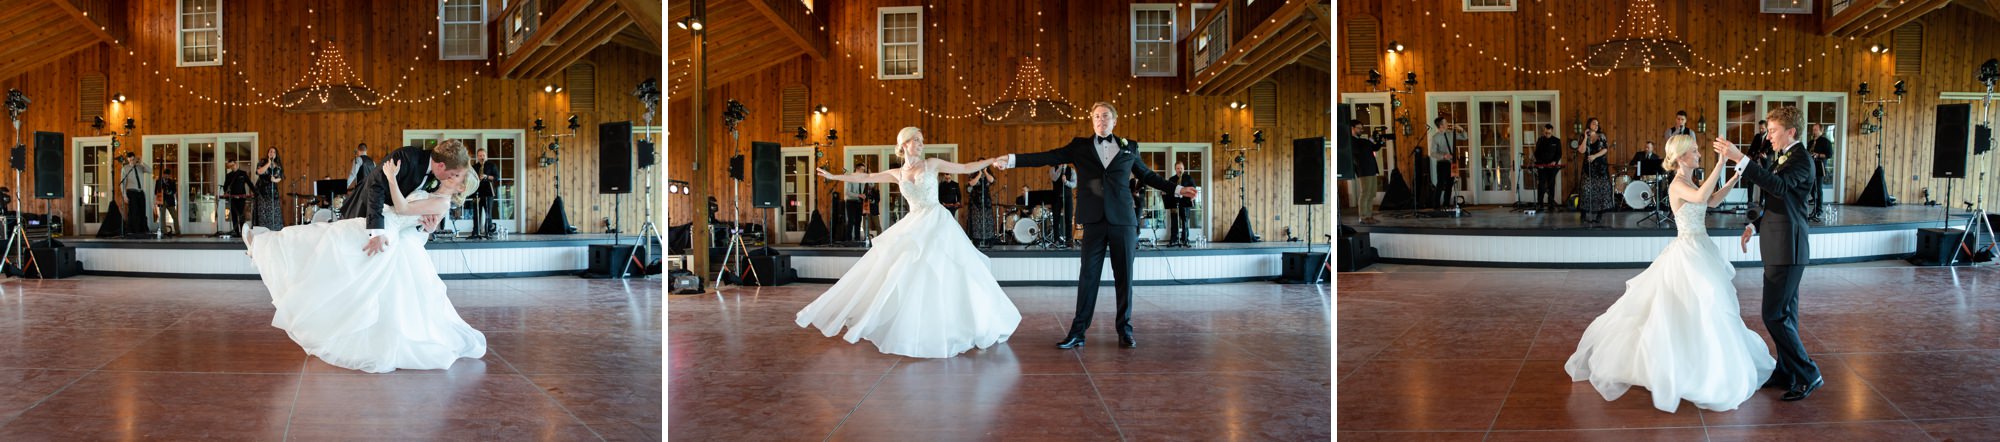 Best Barn Wedding Venues Charlottesville VA